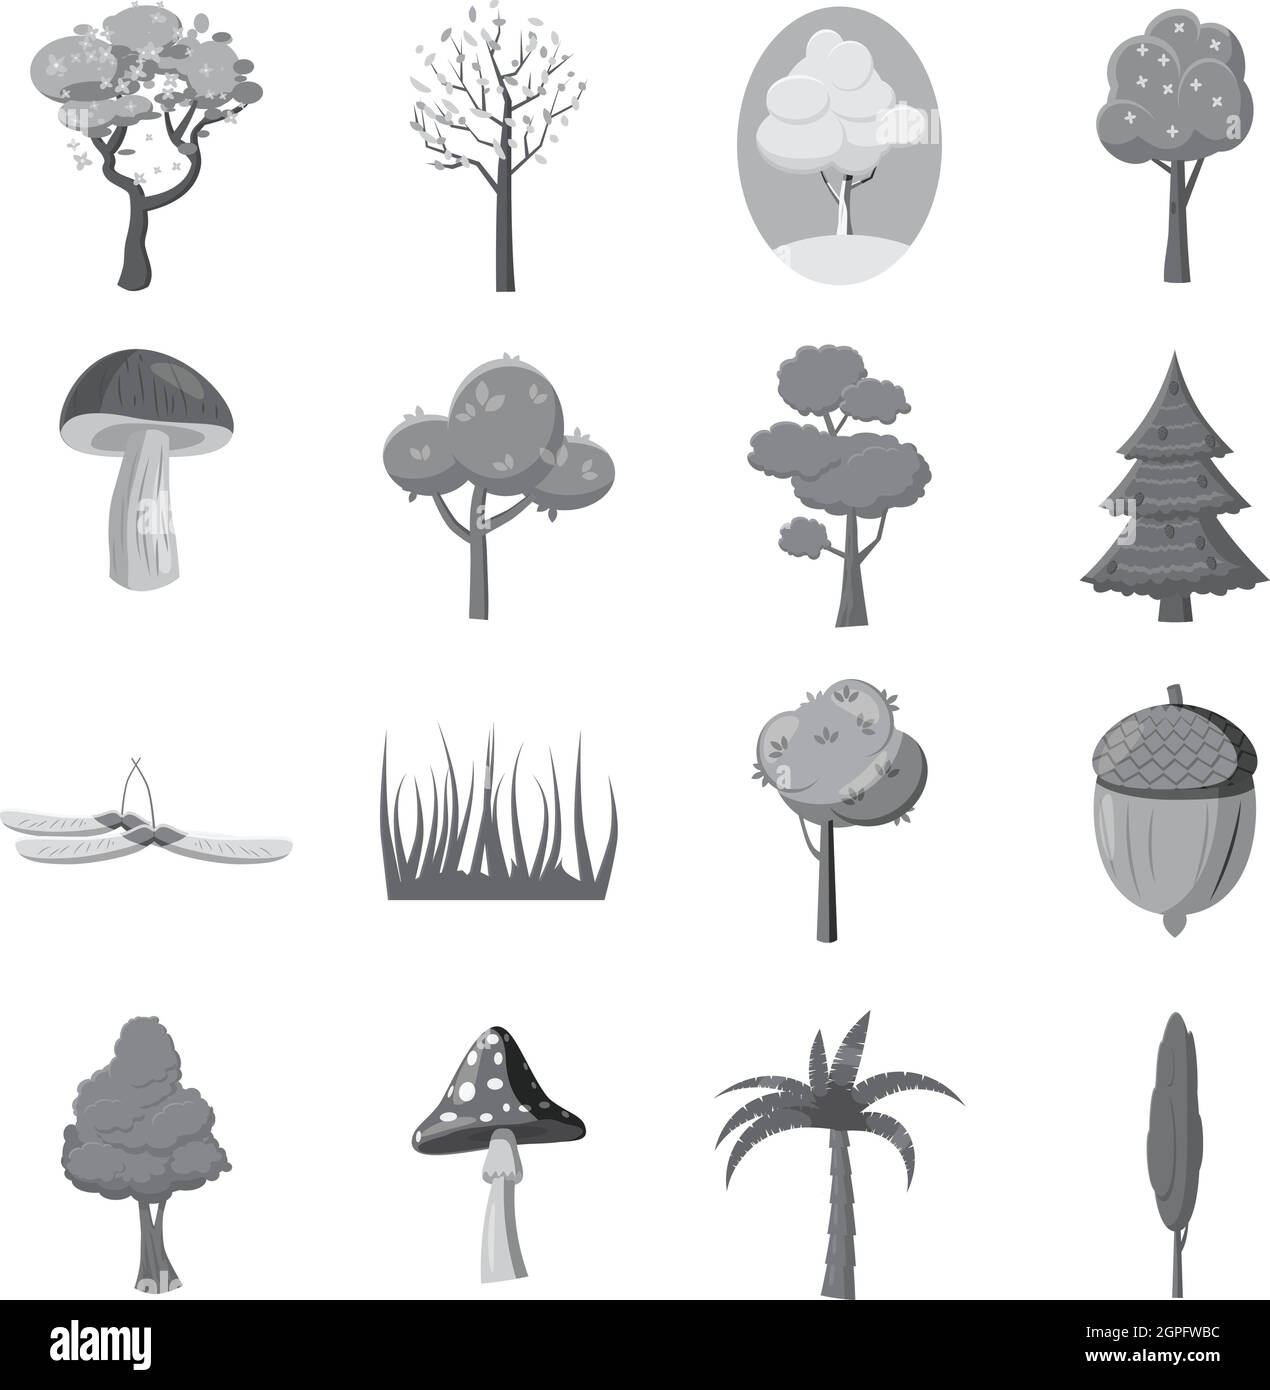 Wald-Symbole Elemente Set, grauen Stil Monochrom Stock Vektor